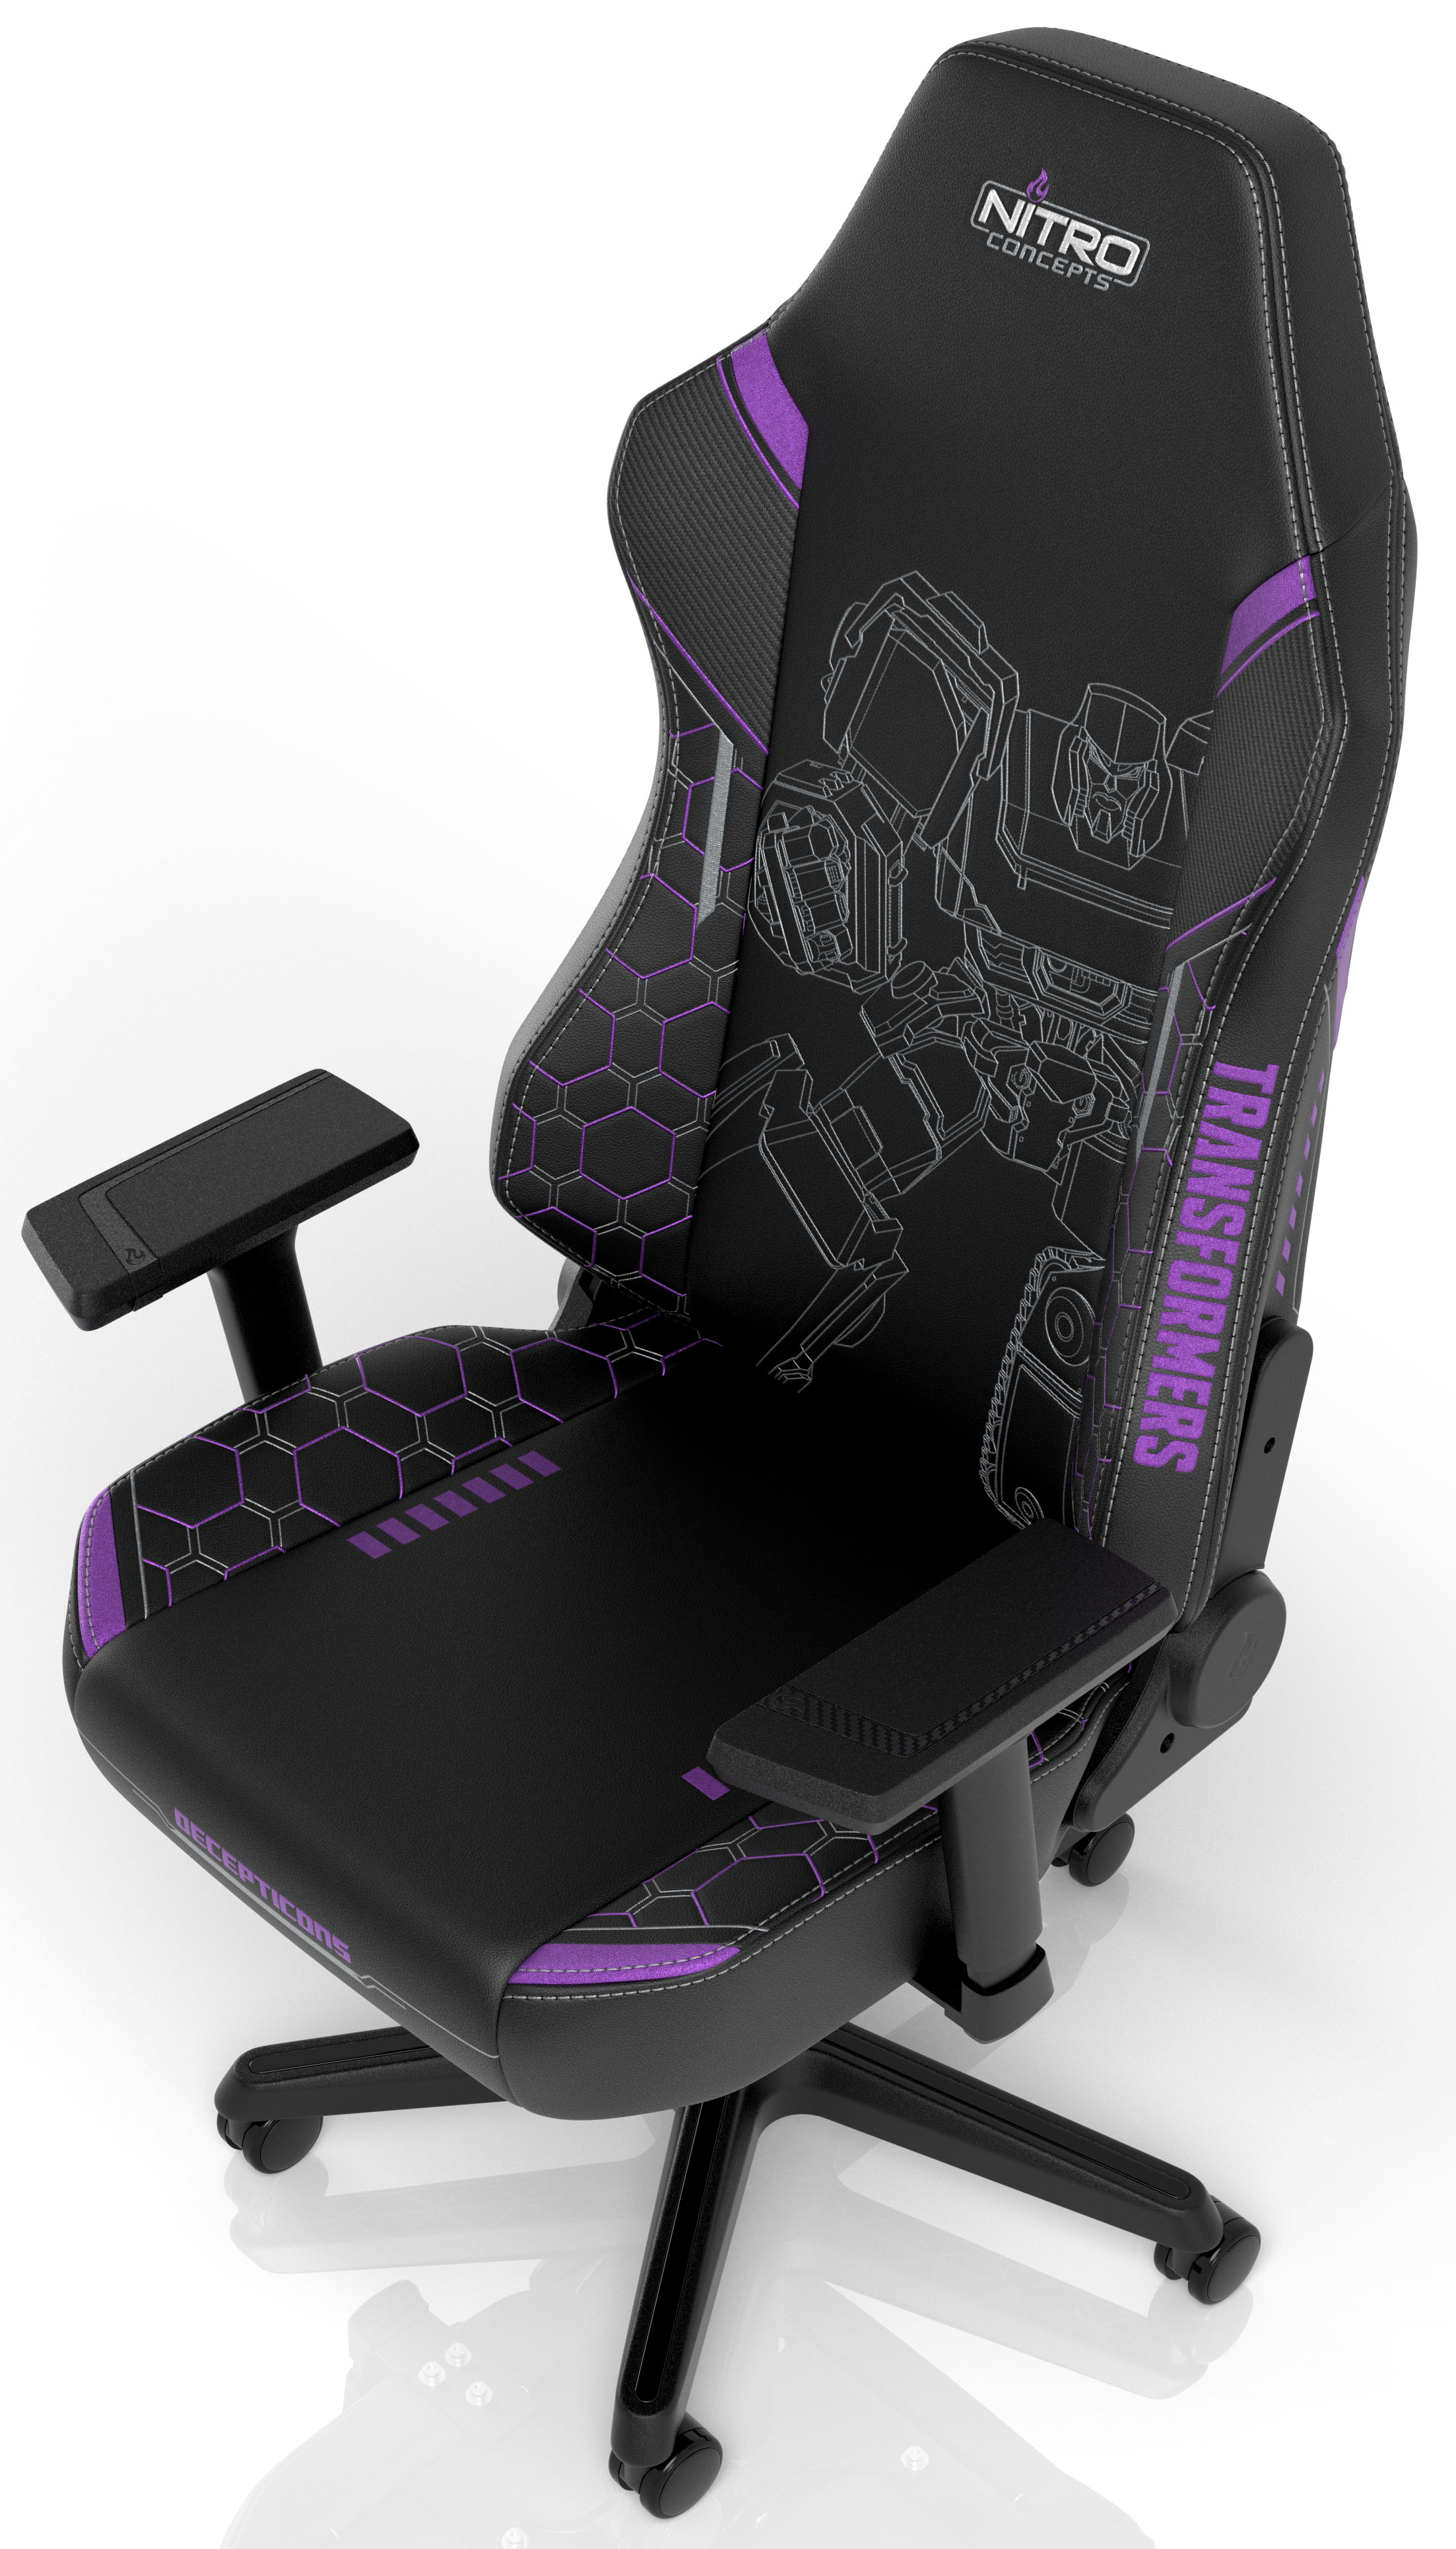 Nitro Concepts - Cadeira Nitro Concepts X1000 Gaming - Transformers Decepticons Edition